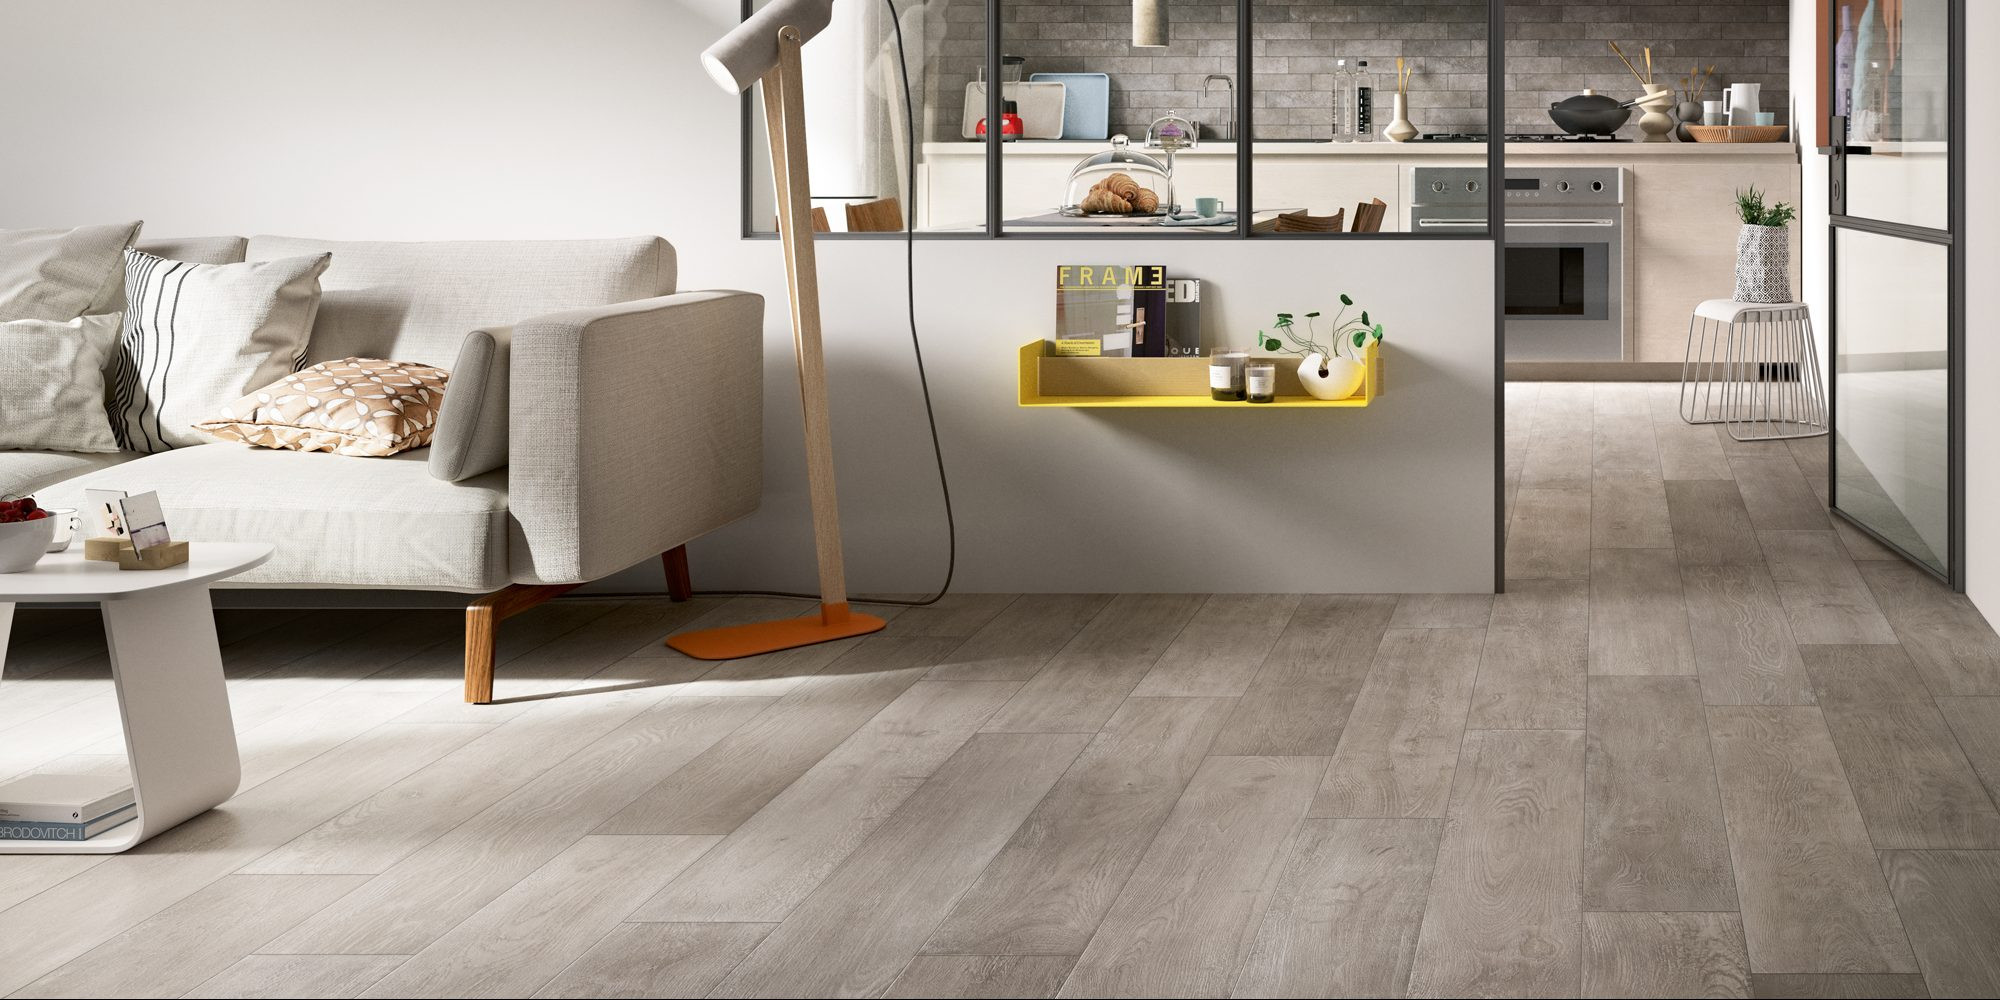 29 Unique Hardwood Floor Colors 2018 2024 free download hardwood floor colors 2018 of floor tiles craven dunnill within practicality meets design